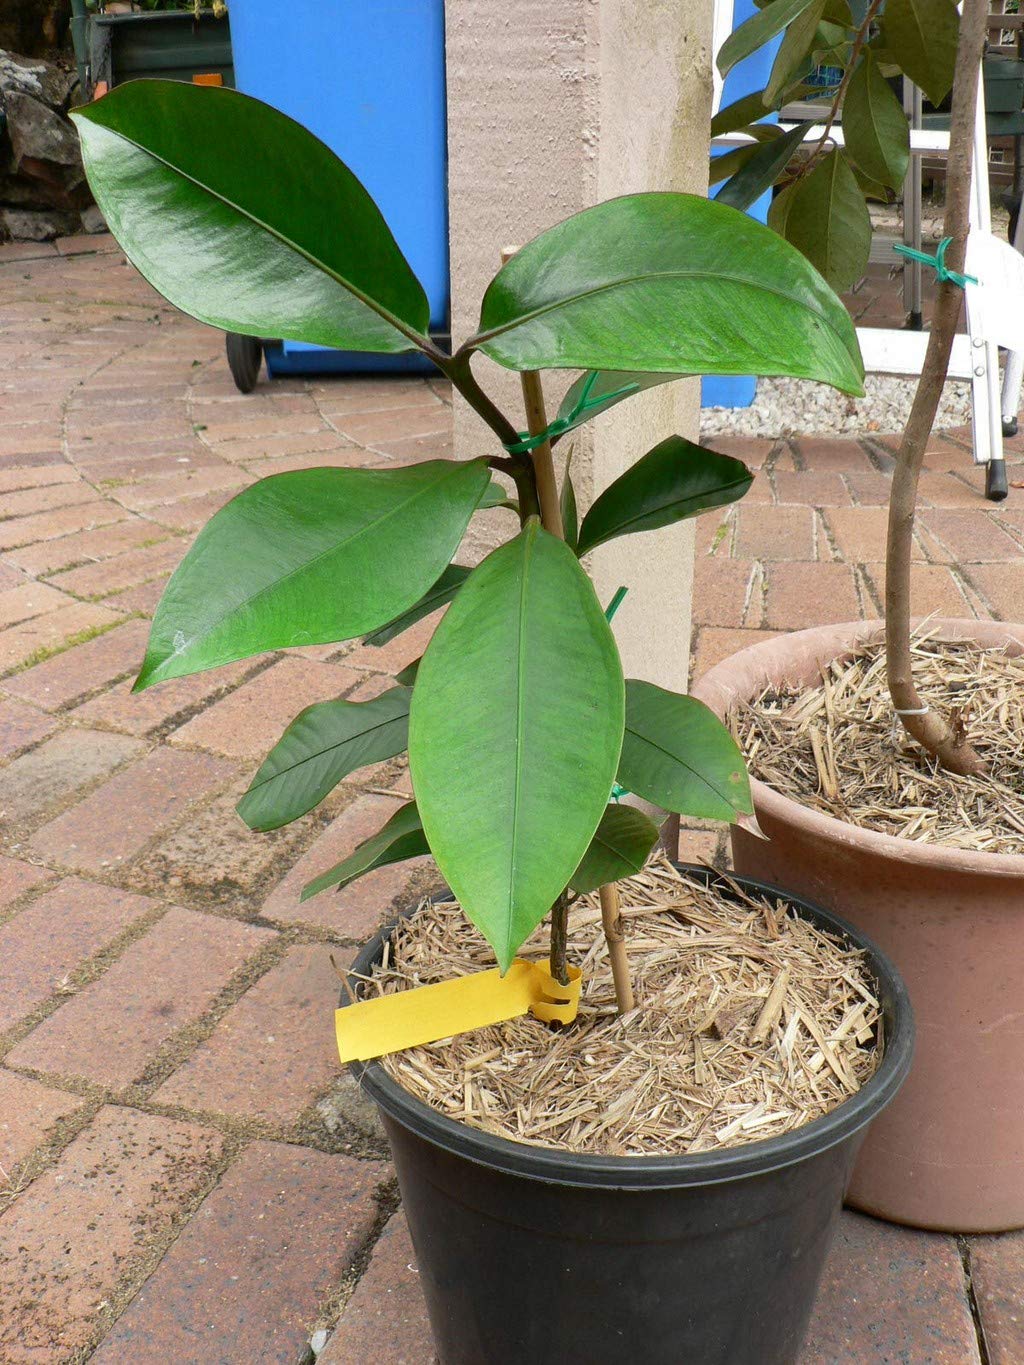 Mangosteen Pericarp Delicious All Season Garden Plant(1 Healthy Live Plant)